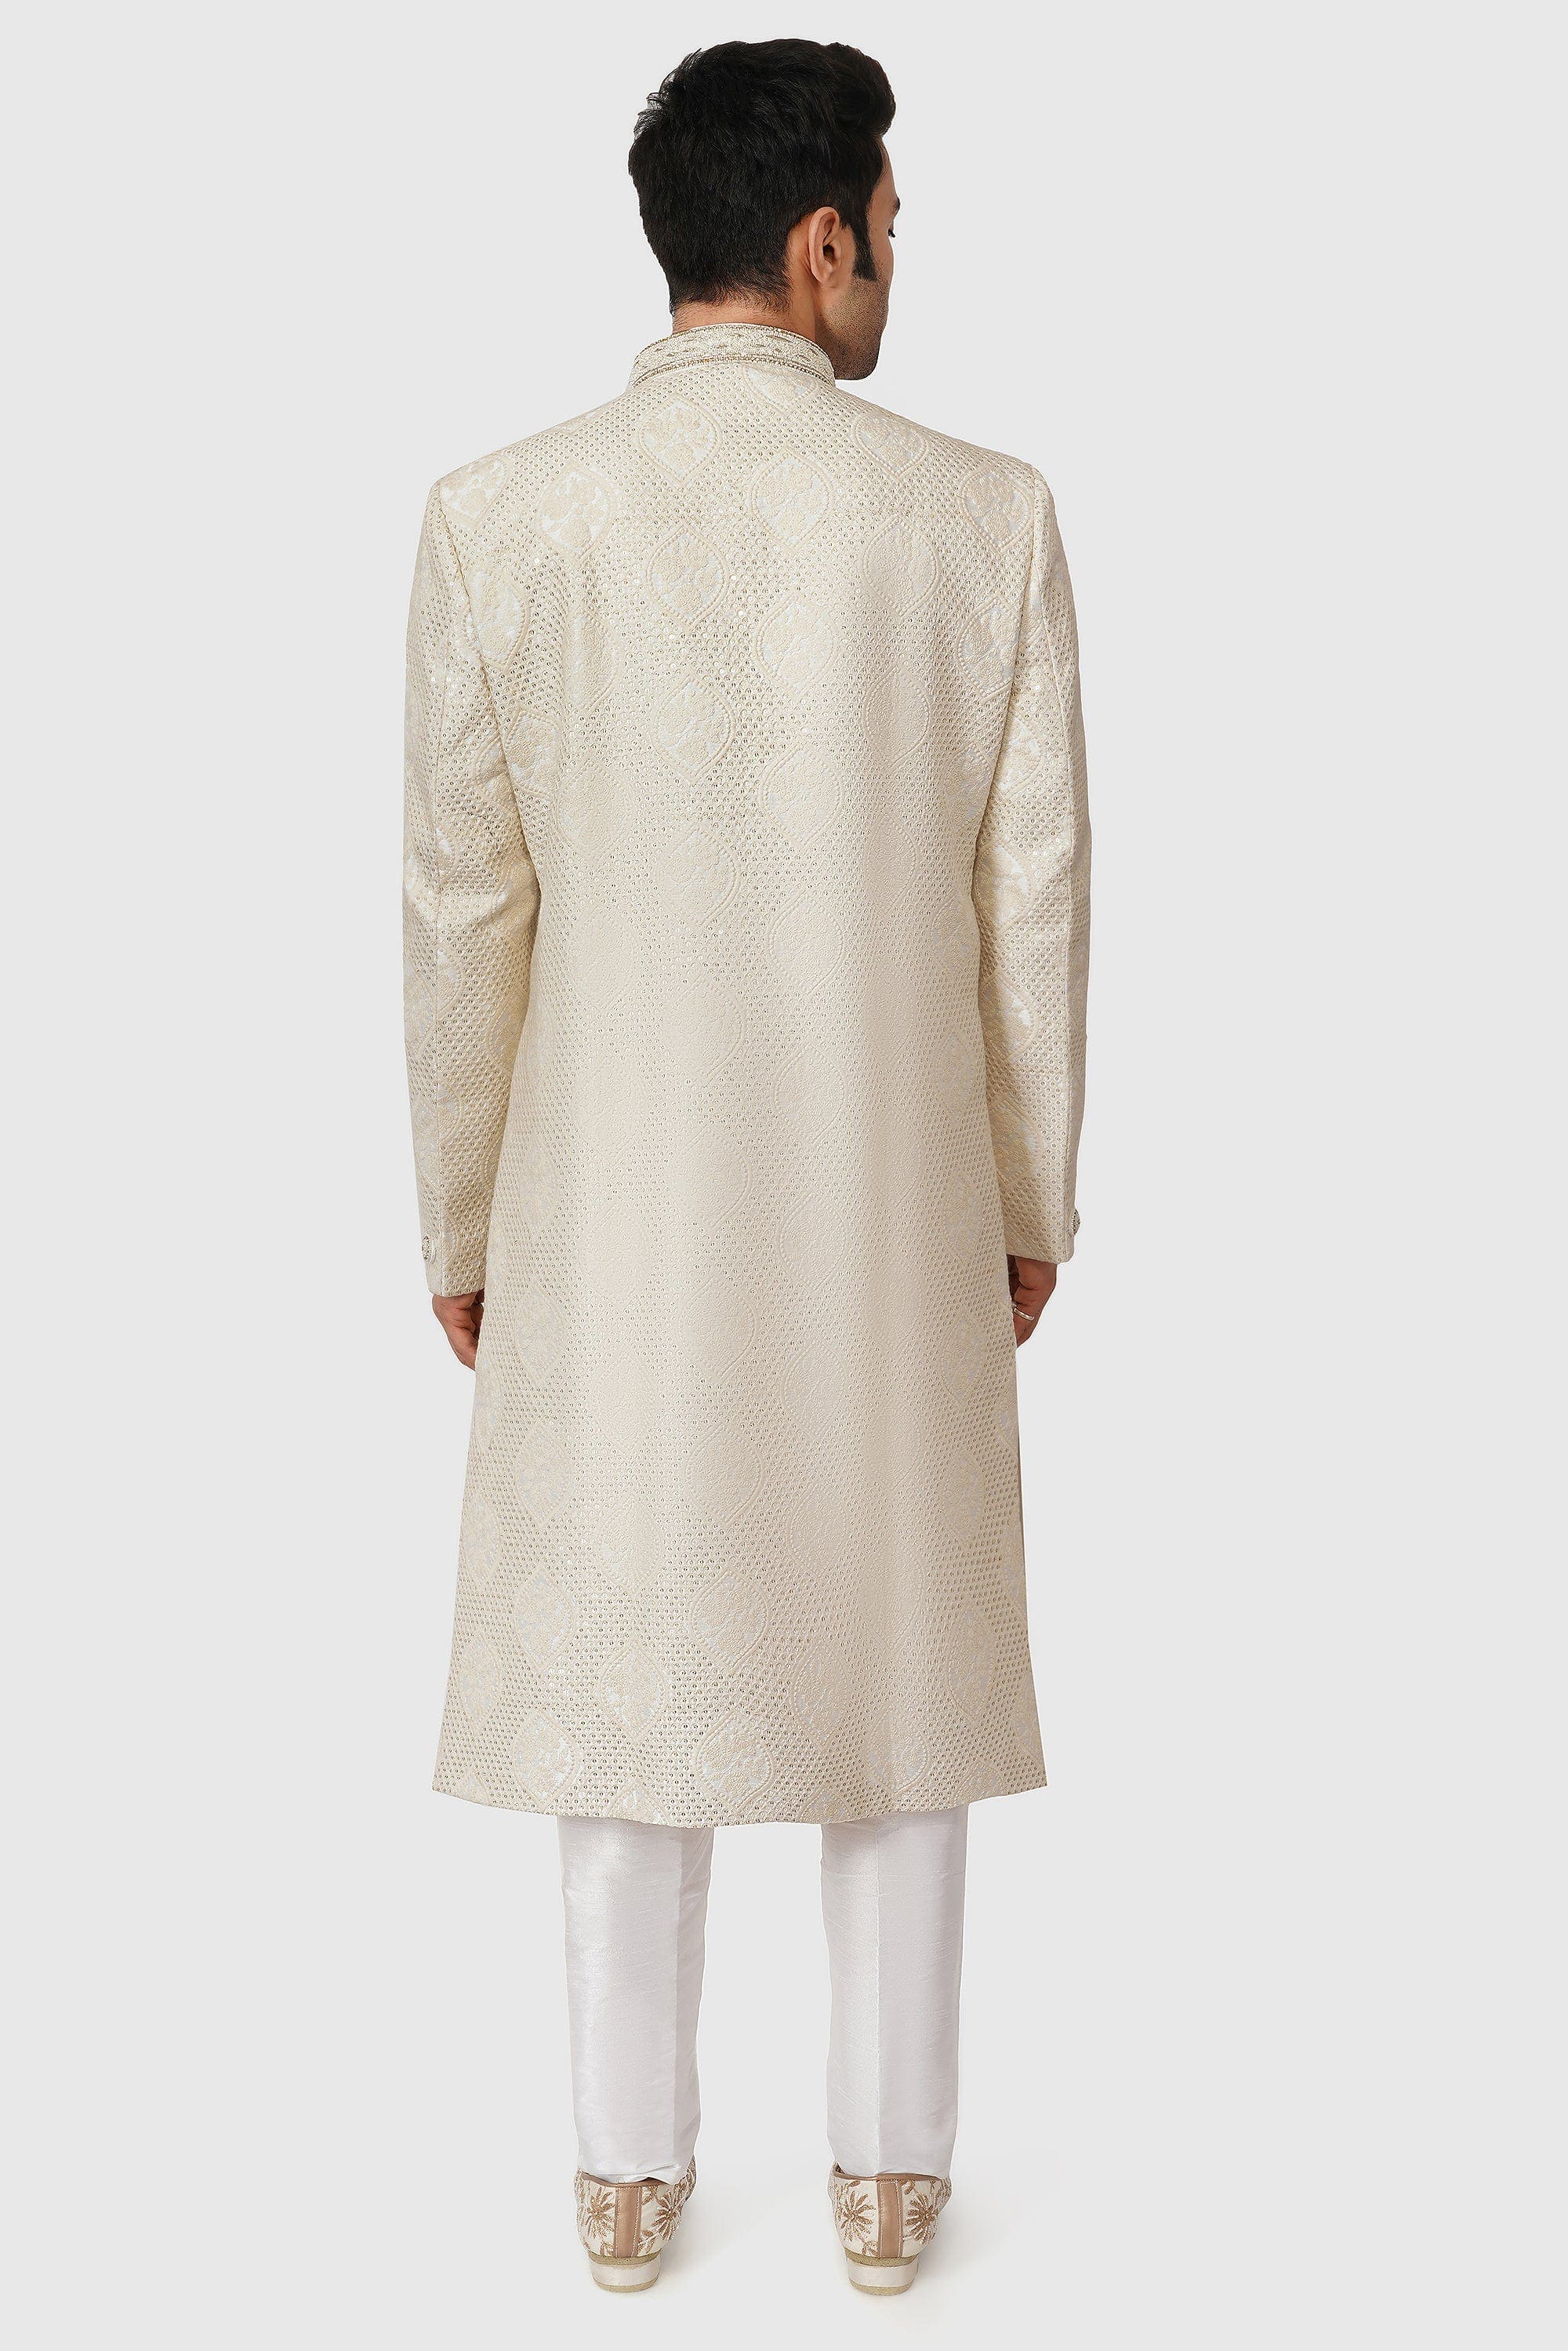 SANTI HOMME Off-White Embroidered Sherwani Set